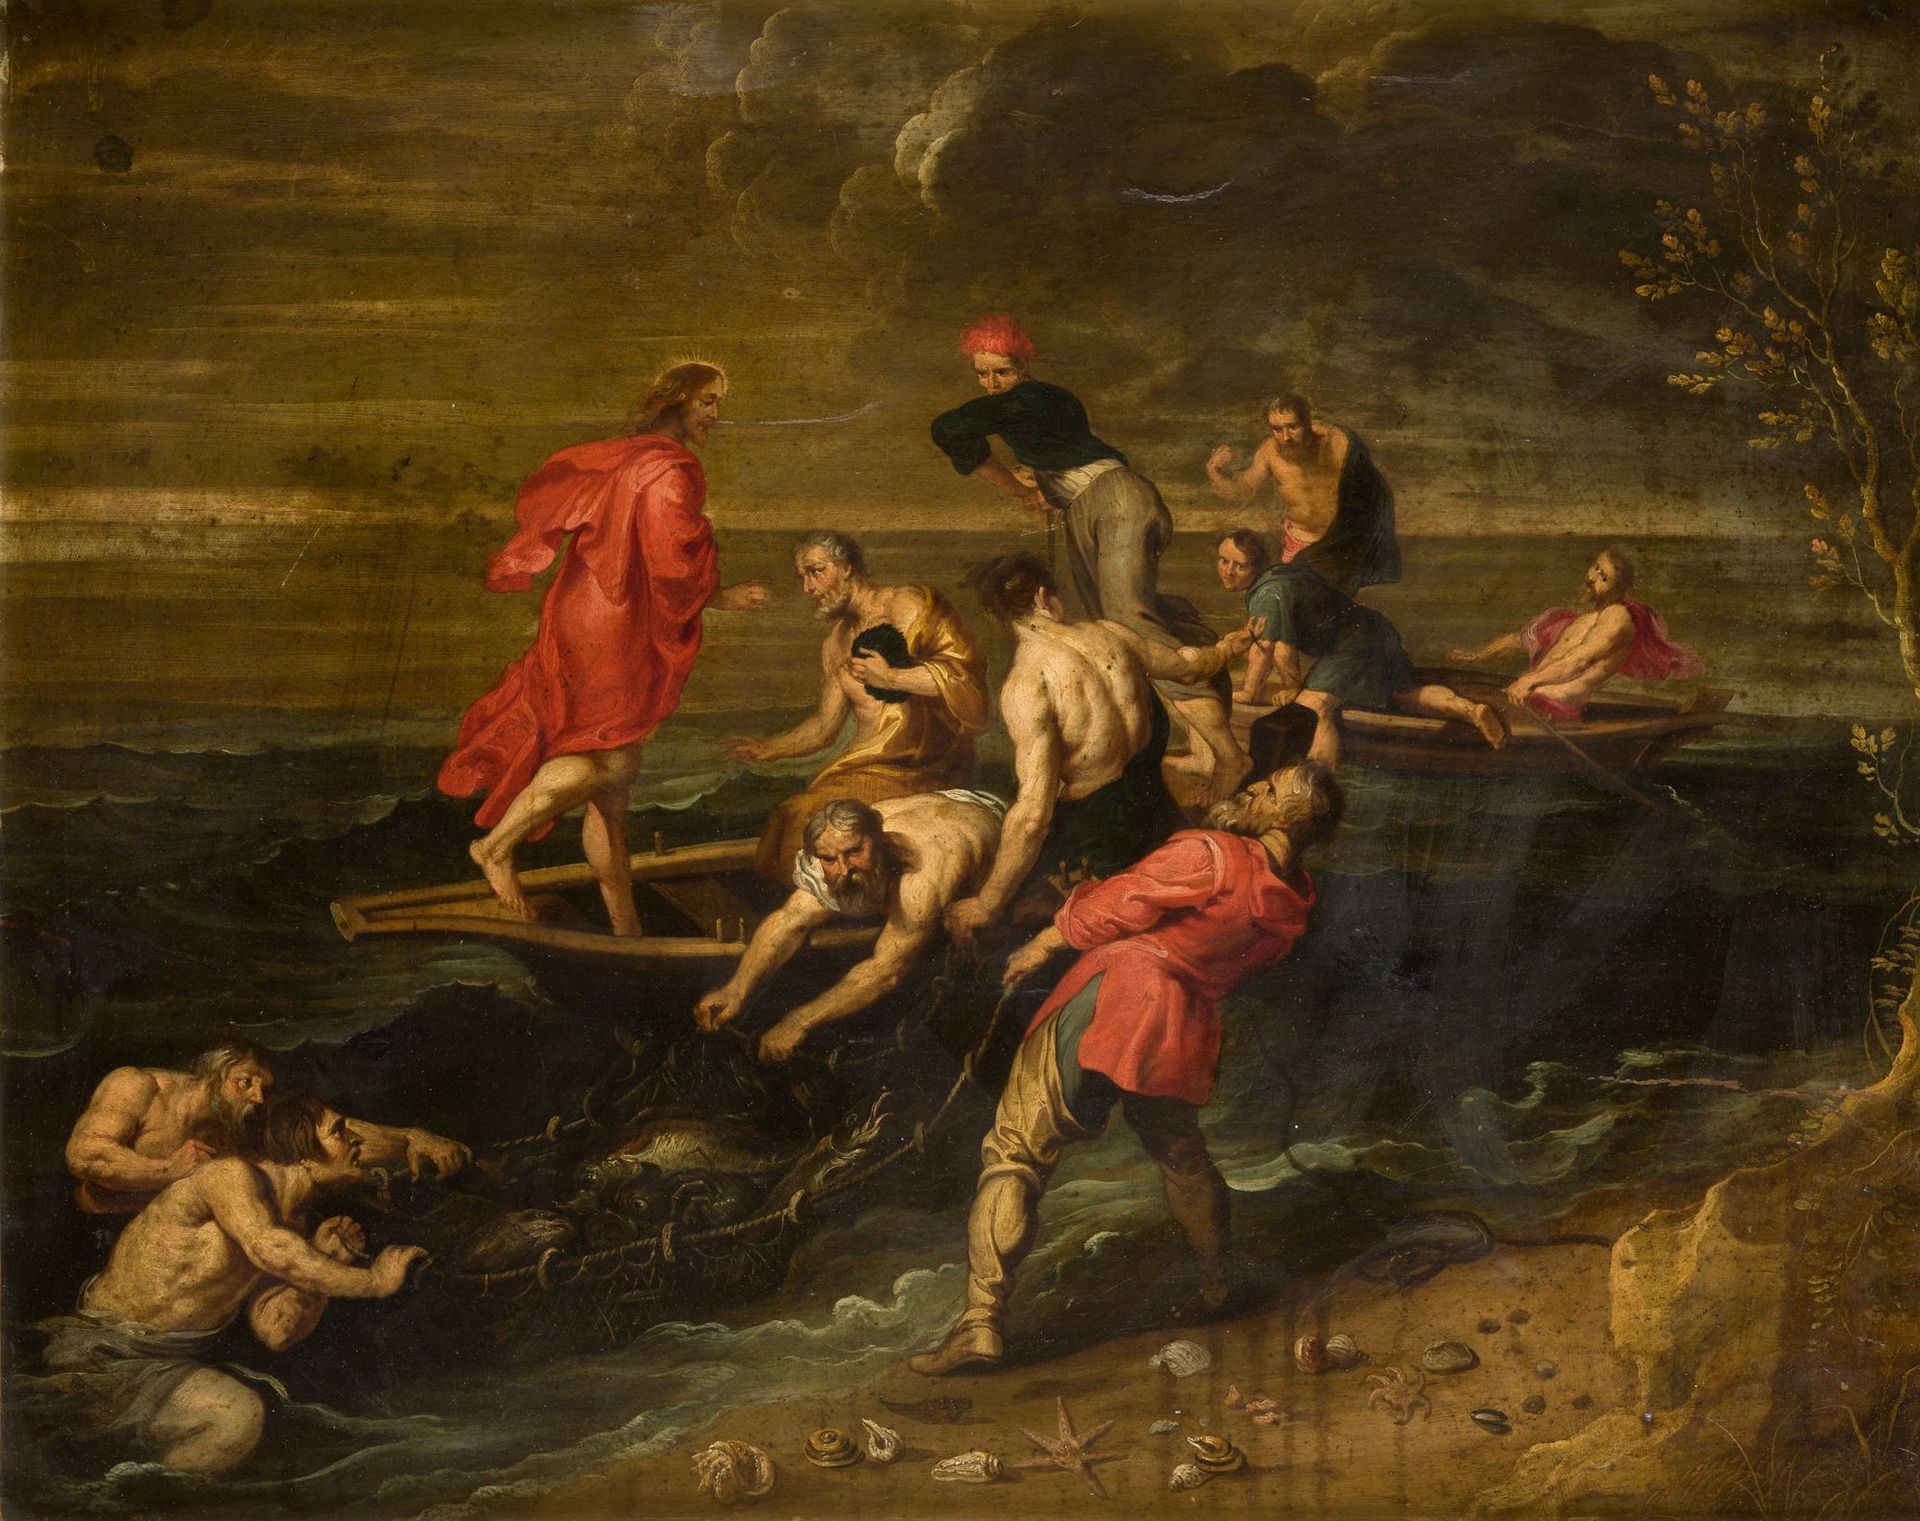 CIRCULO DE RUBENS (C. 17th / ?) "The miraculous catch" Olio su rame. 68 x 85 cm